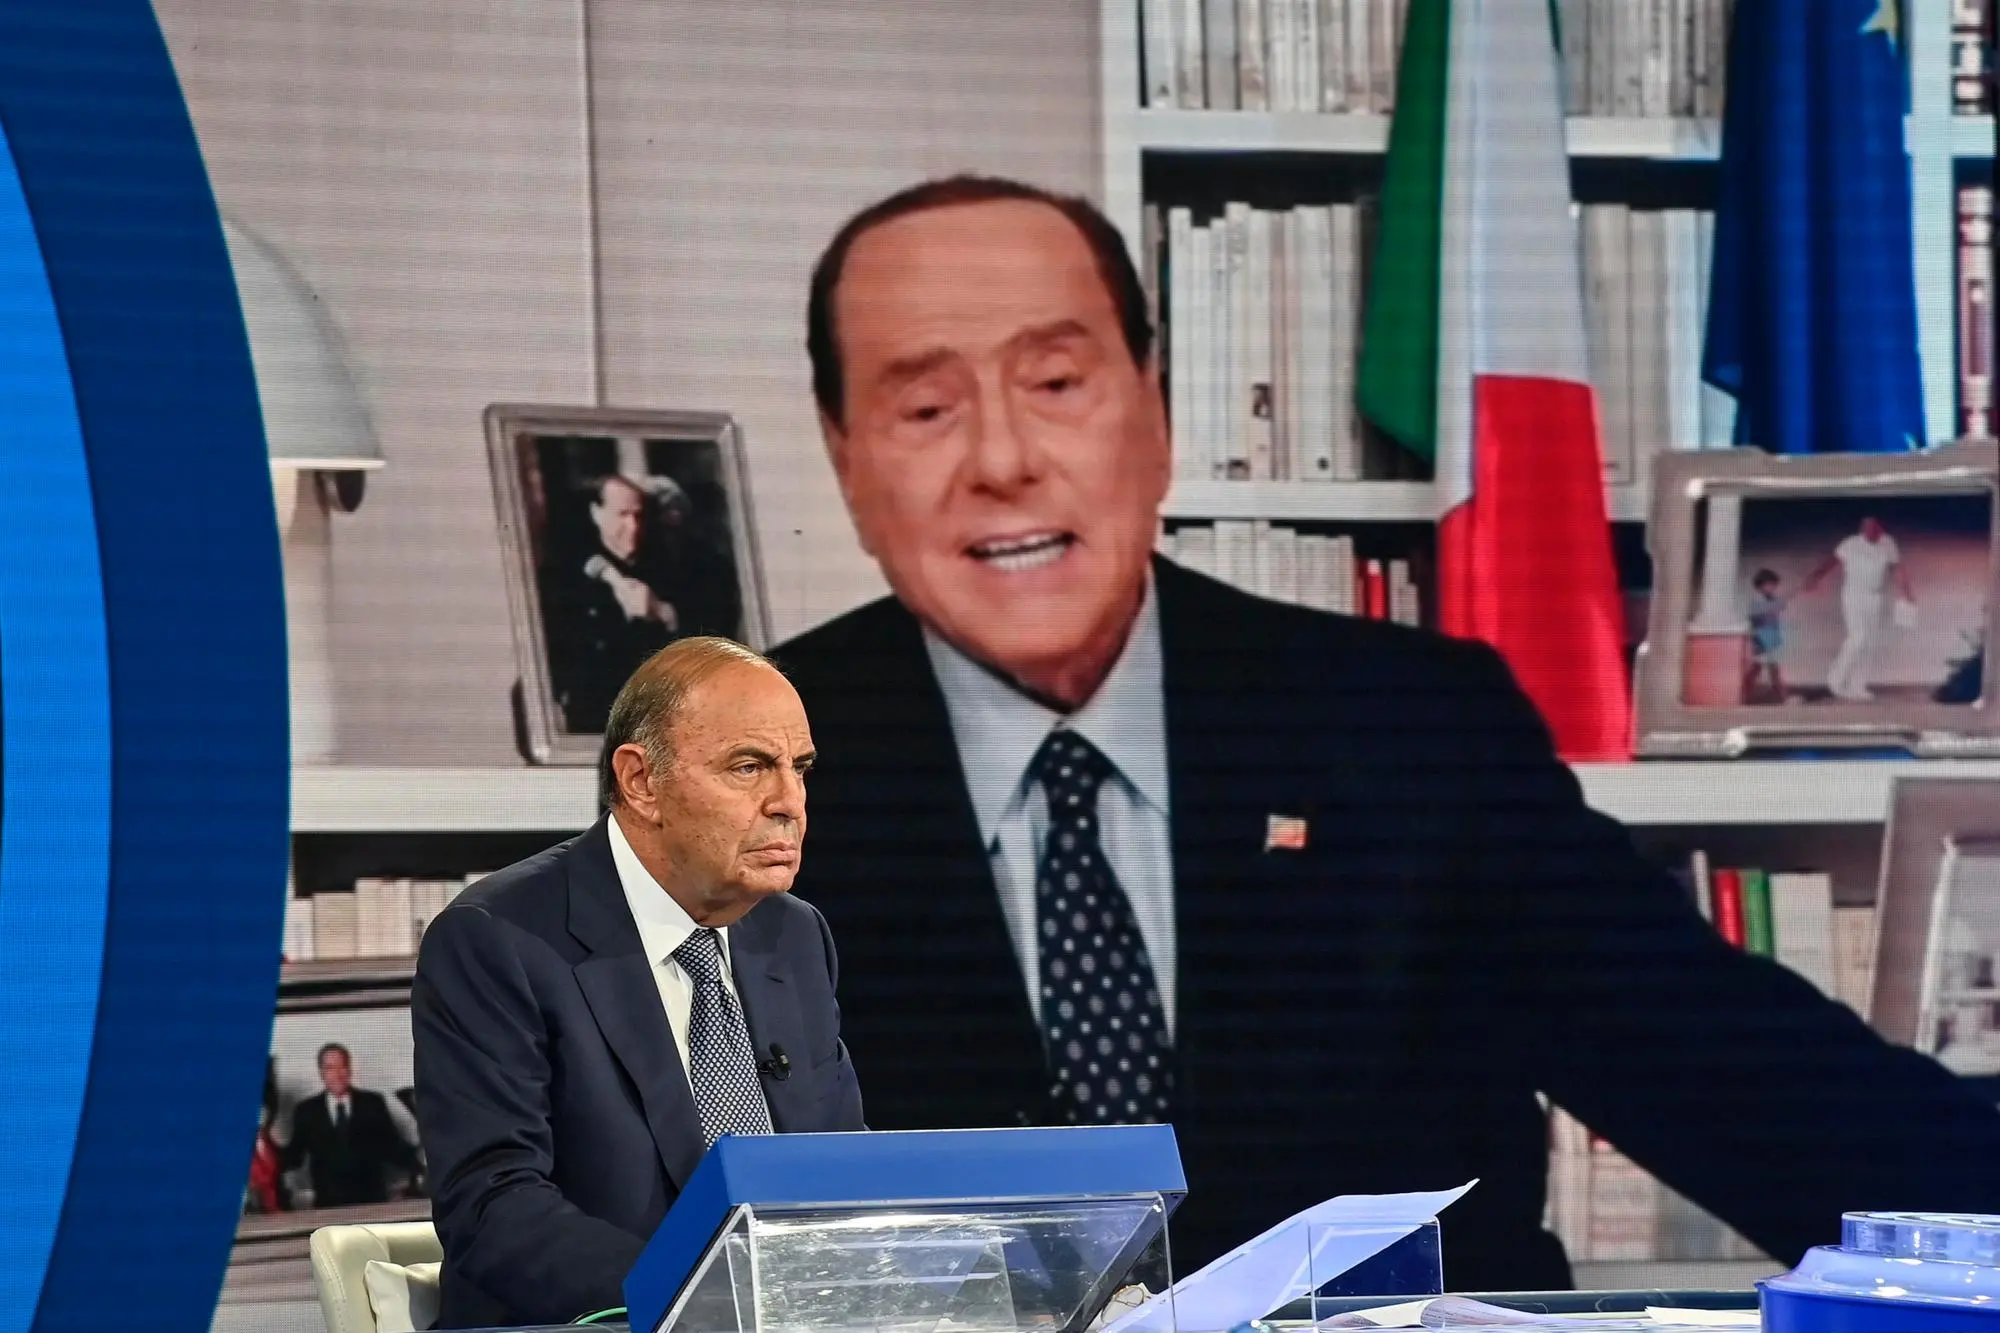 西尔维奥·贝卢斯科尼 (Silvio Berlusconi) 在 &quot;Porta a porta&quot; (安萨)